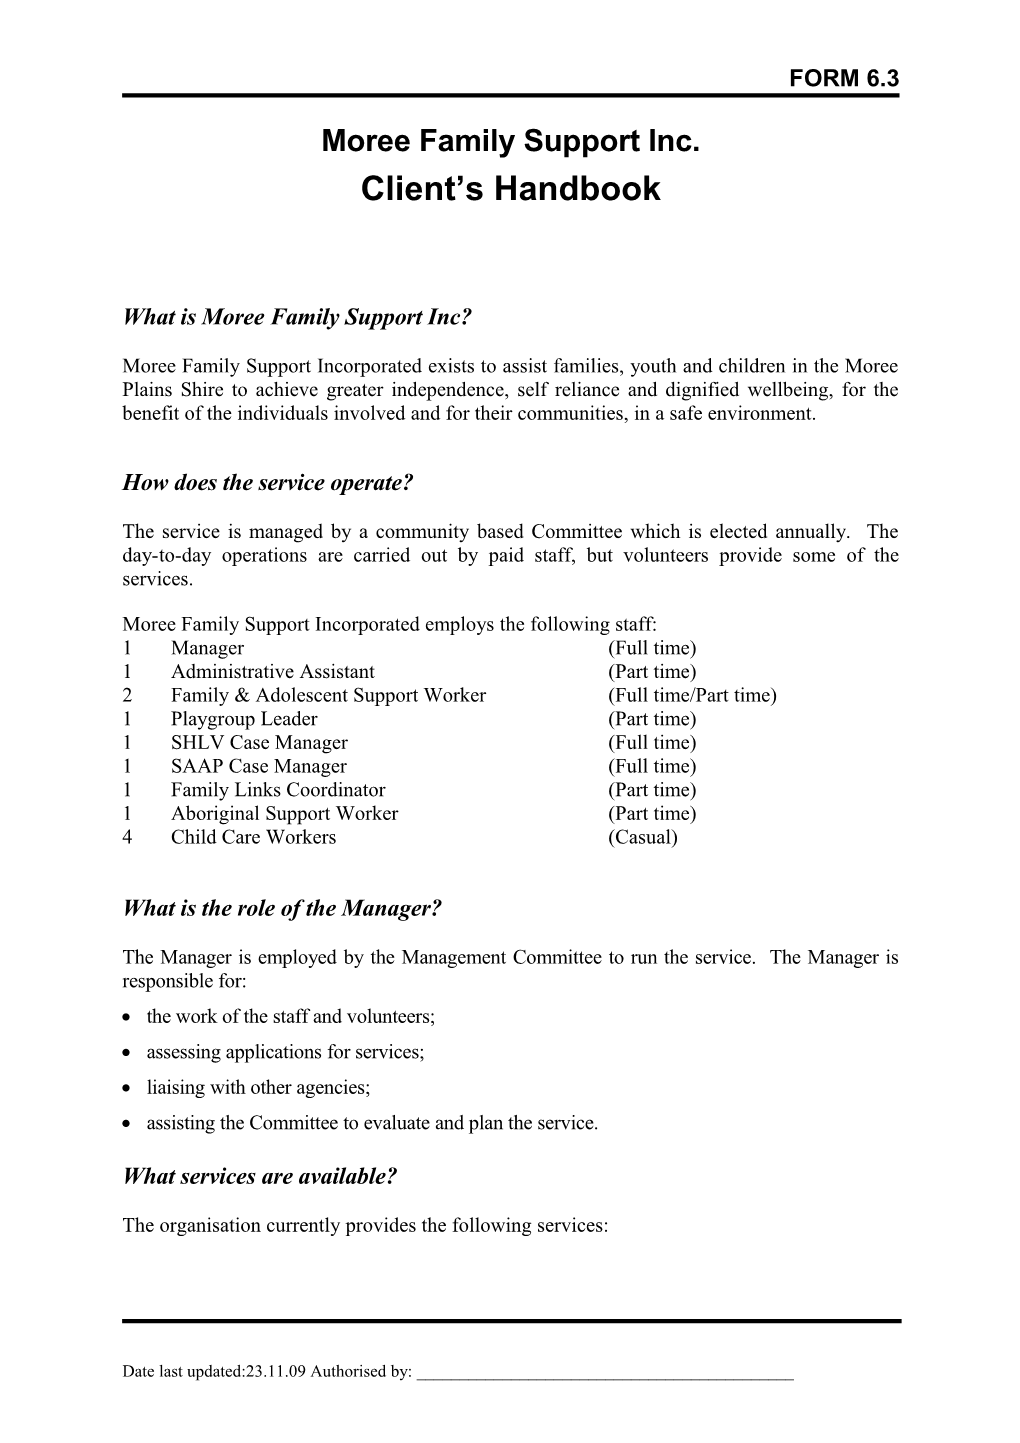 Acorn Home Support Client S Handbook